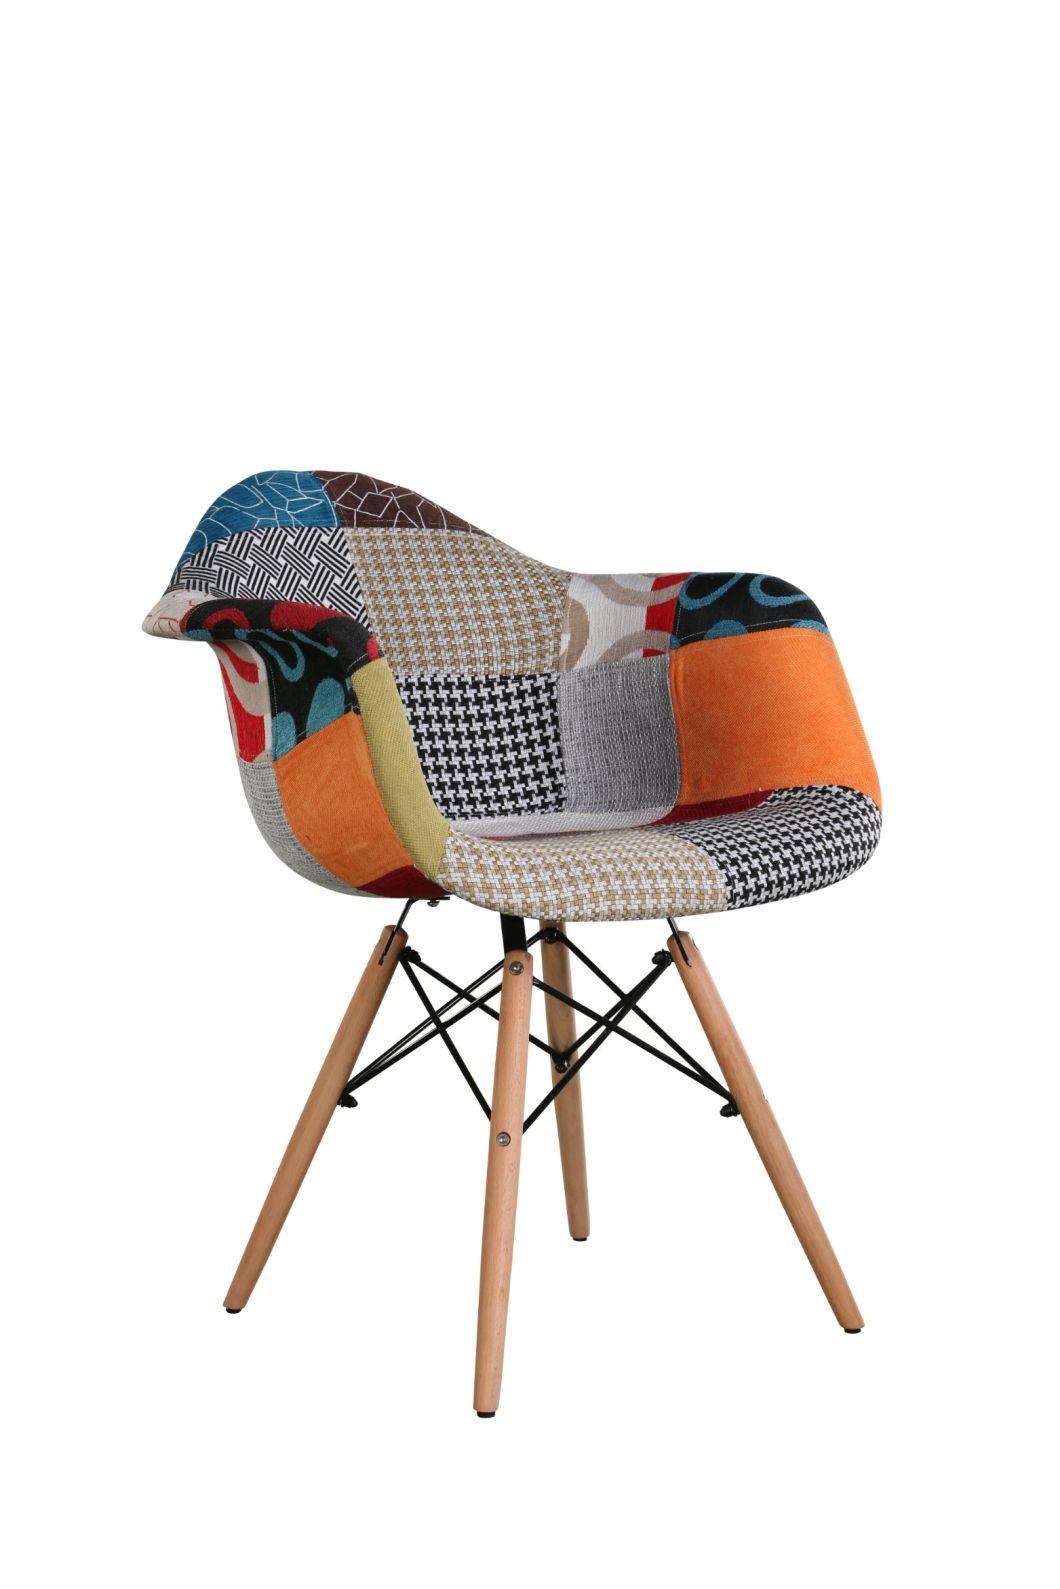 Relax Living Room Leisure Fabric Metal Leg Single Seat Hotel Sofa Chair